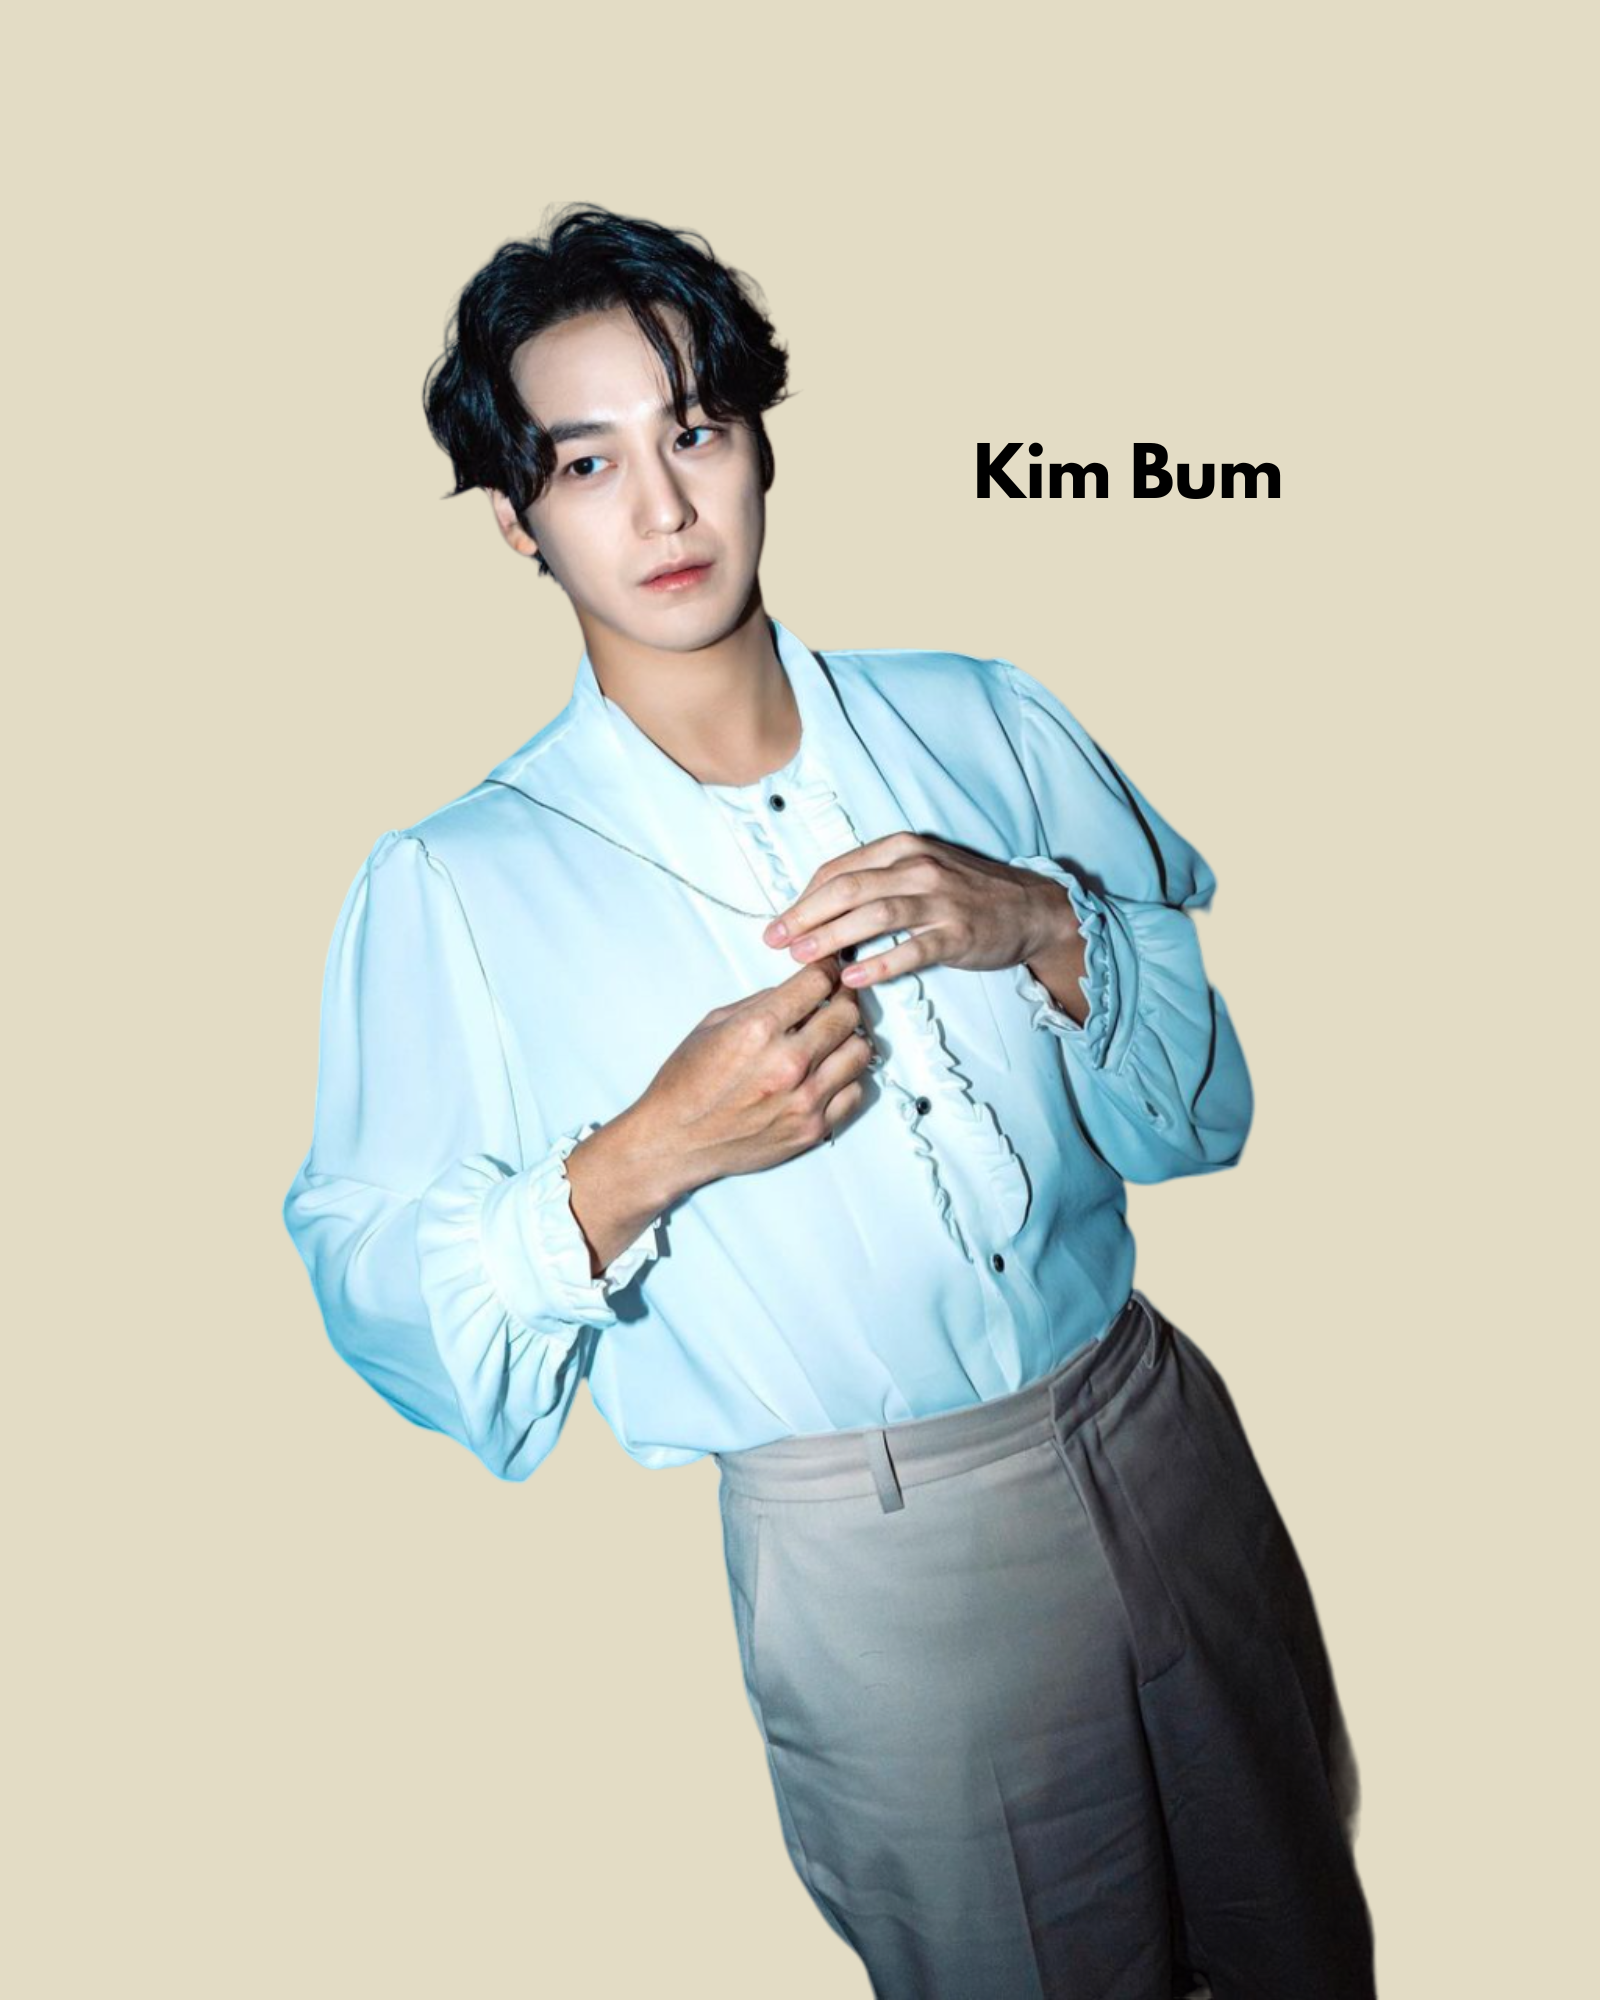 Kim Bum